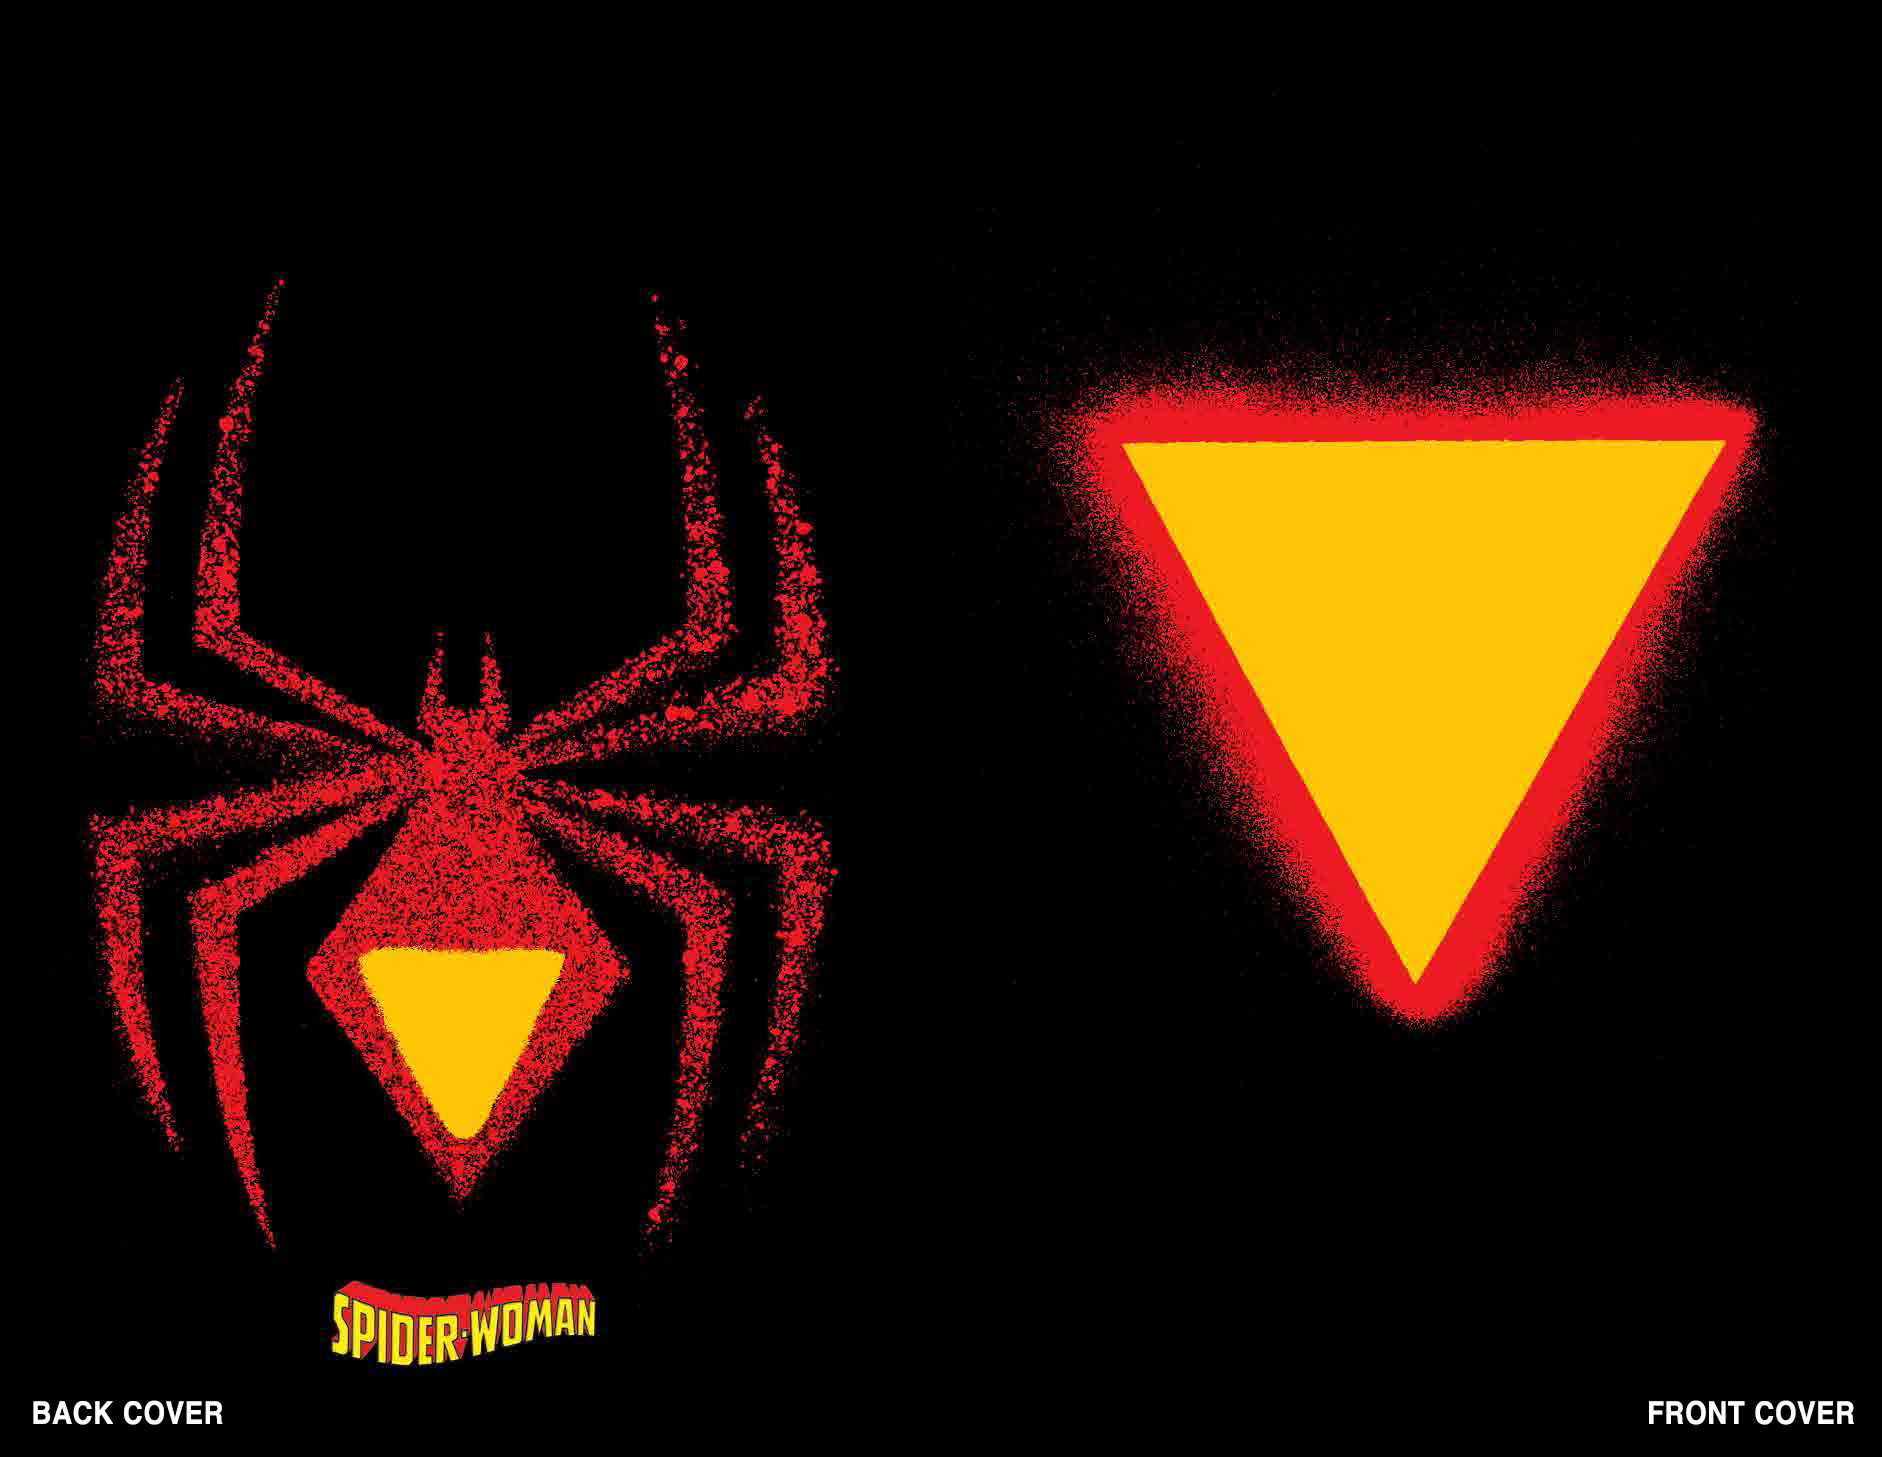 Marvel Comics reveals award-winning graphic designer Chip Kidd's Spider-Woman variant cover